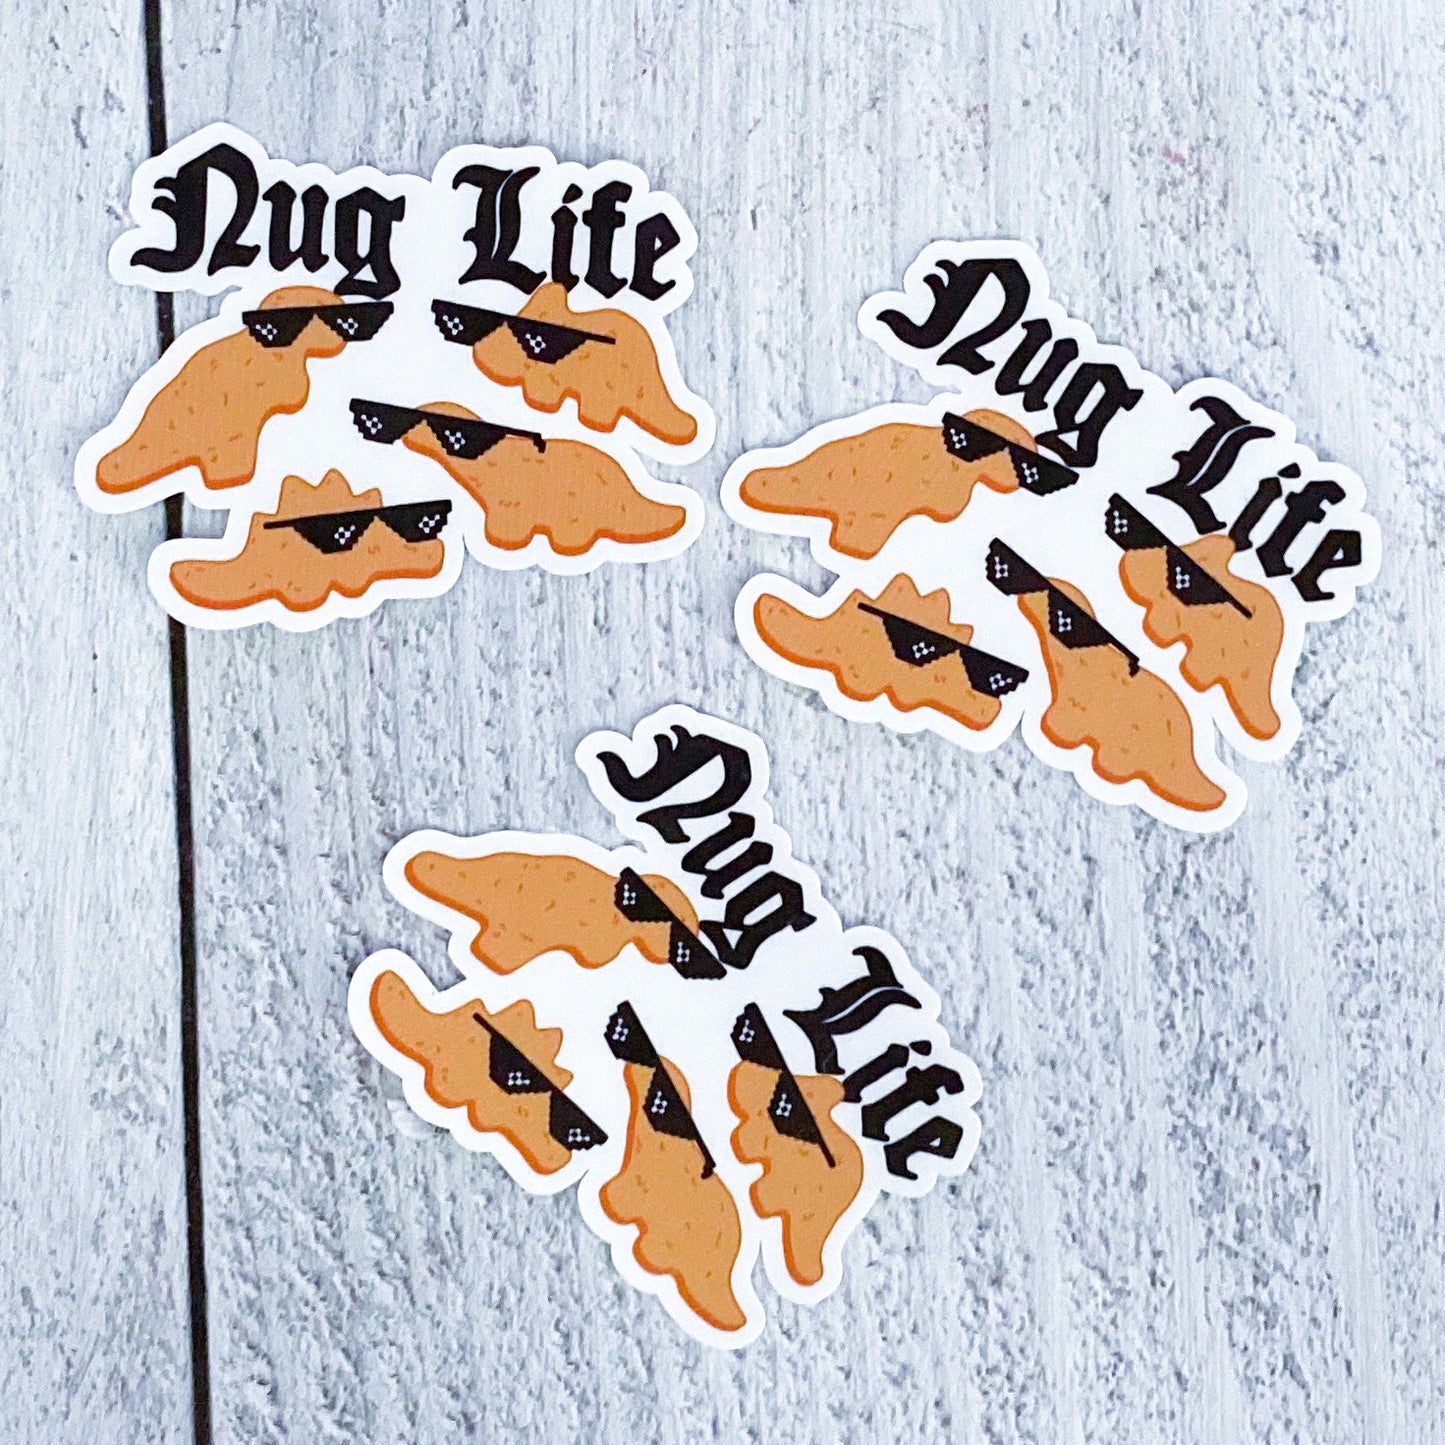 Nug Life Sticker